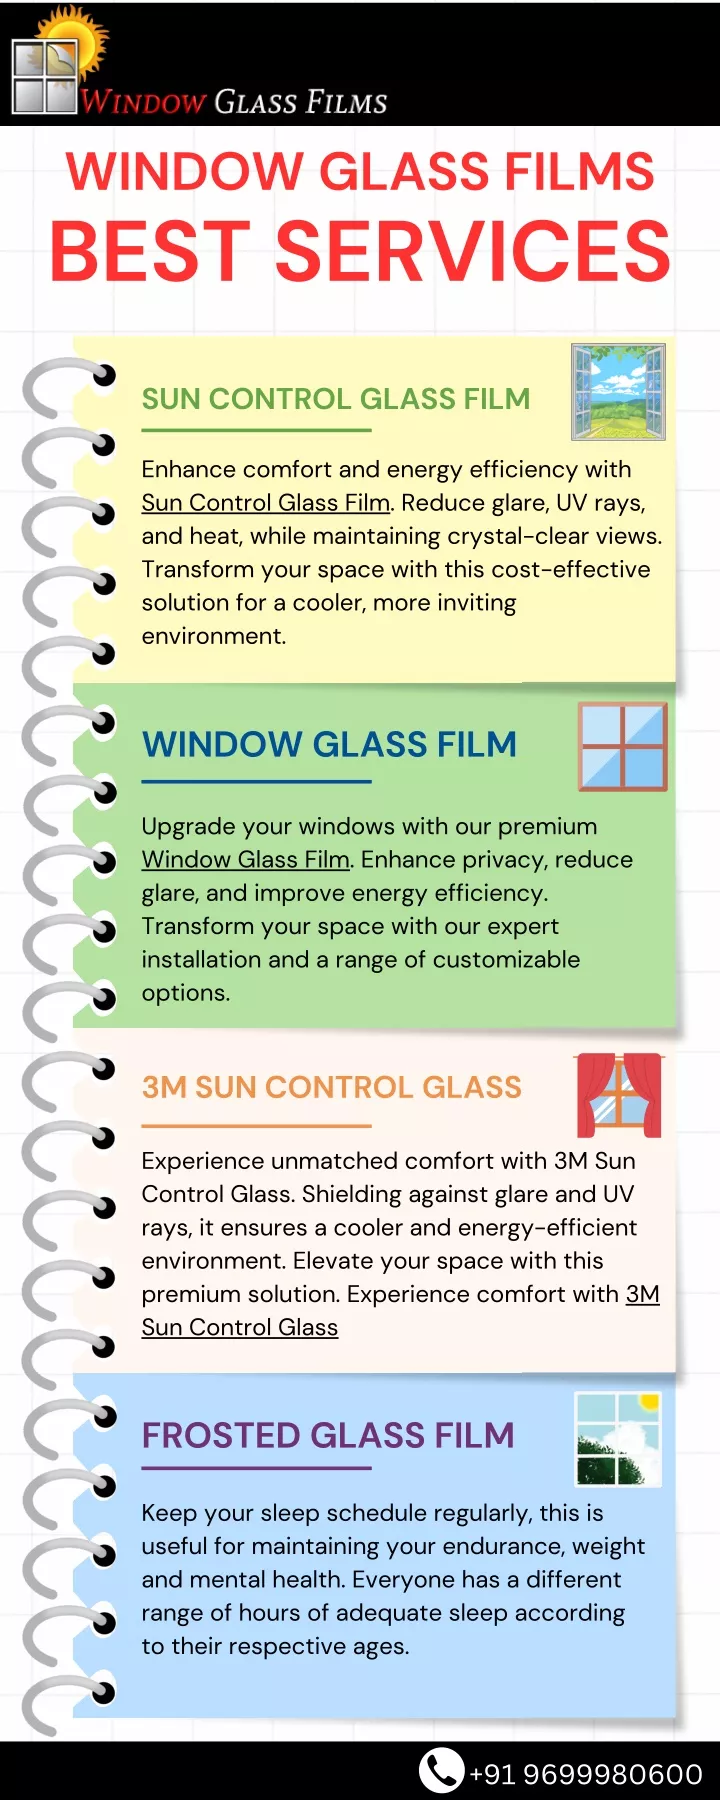 window glass films best services